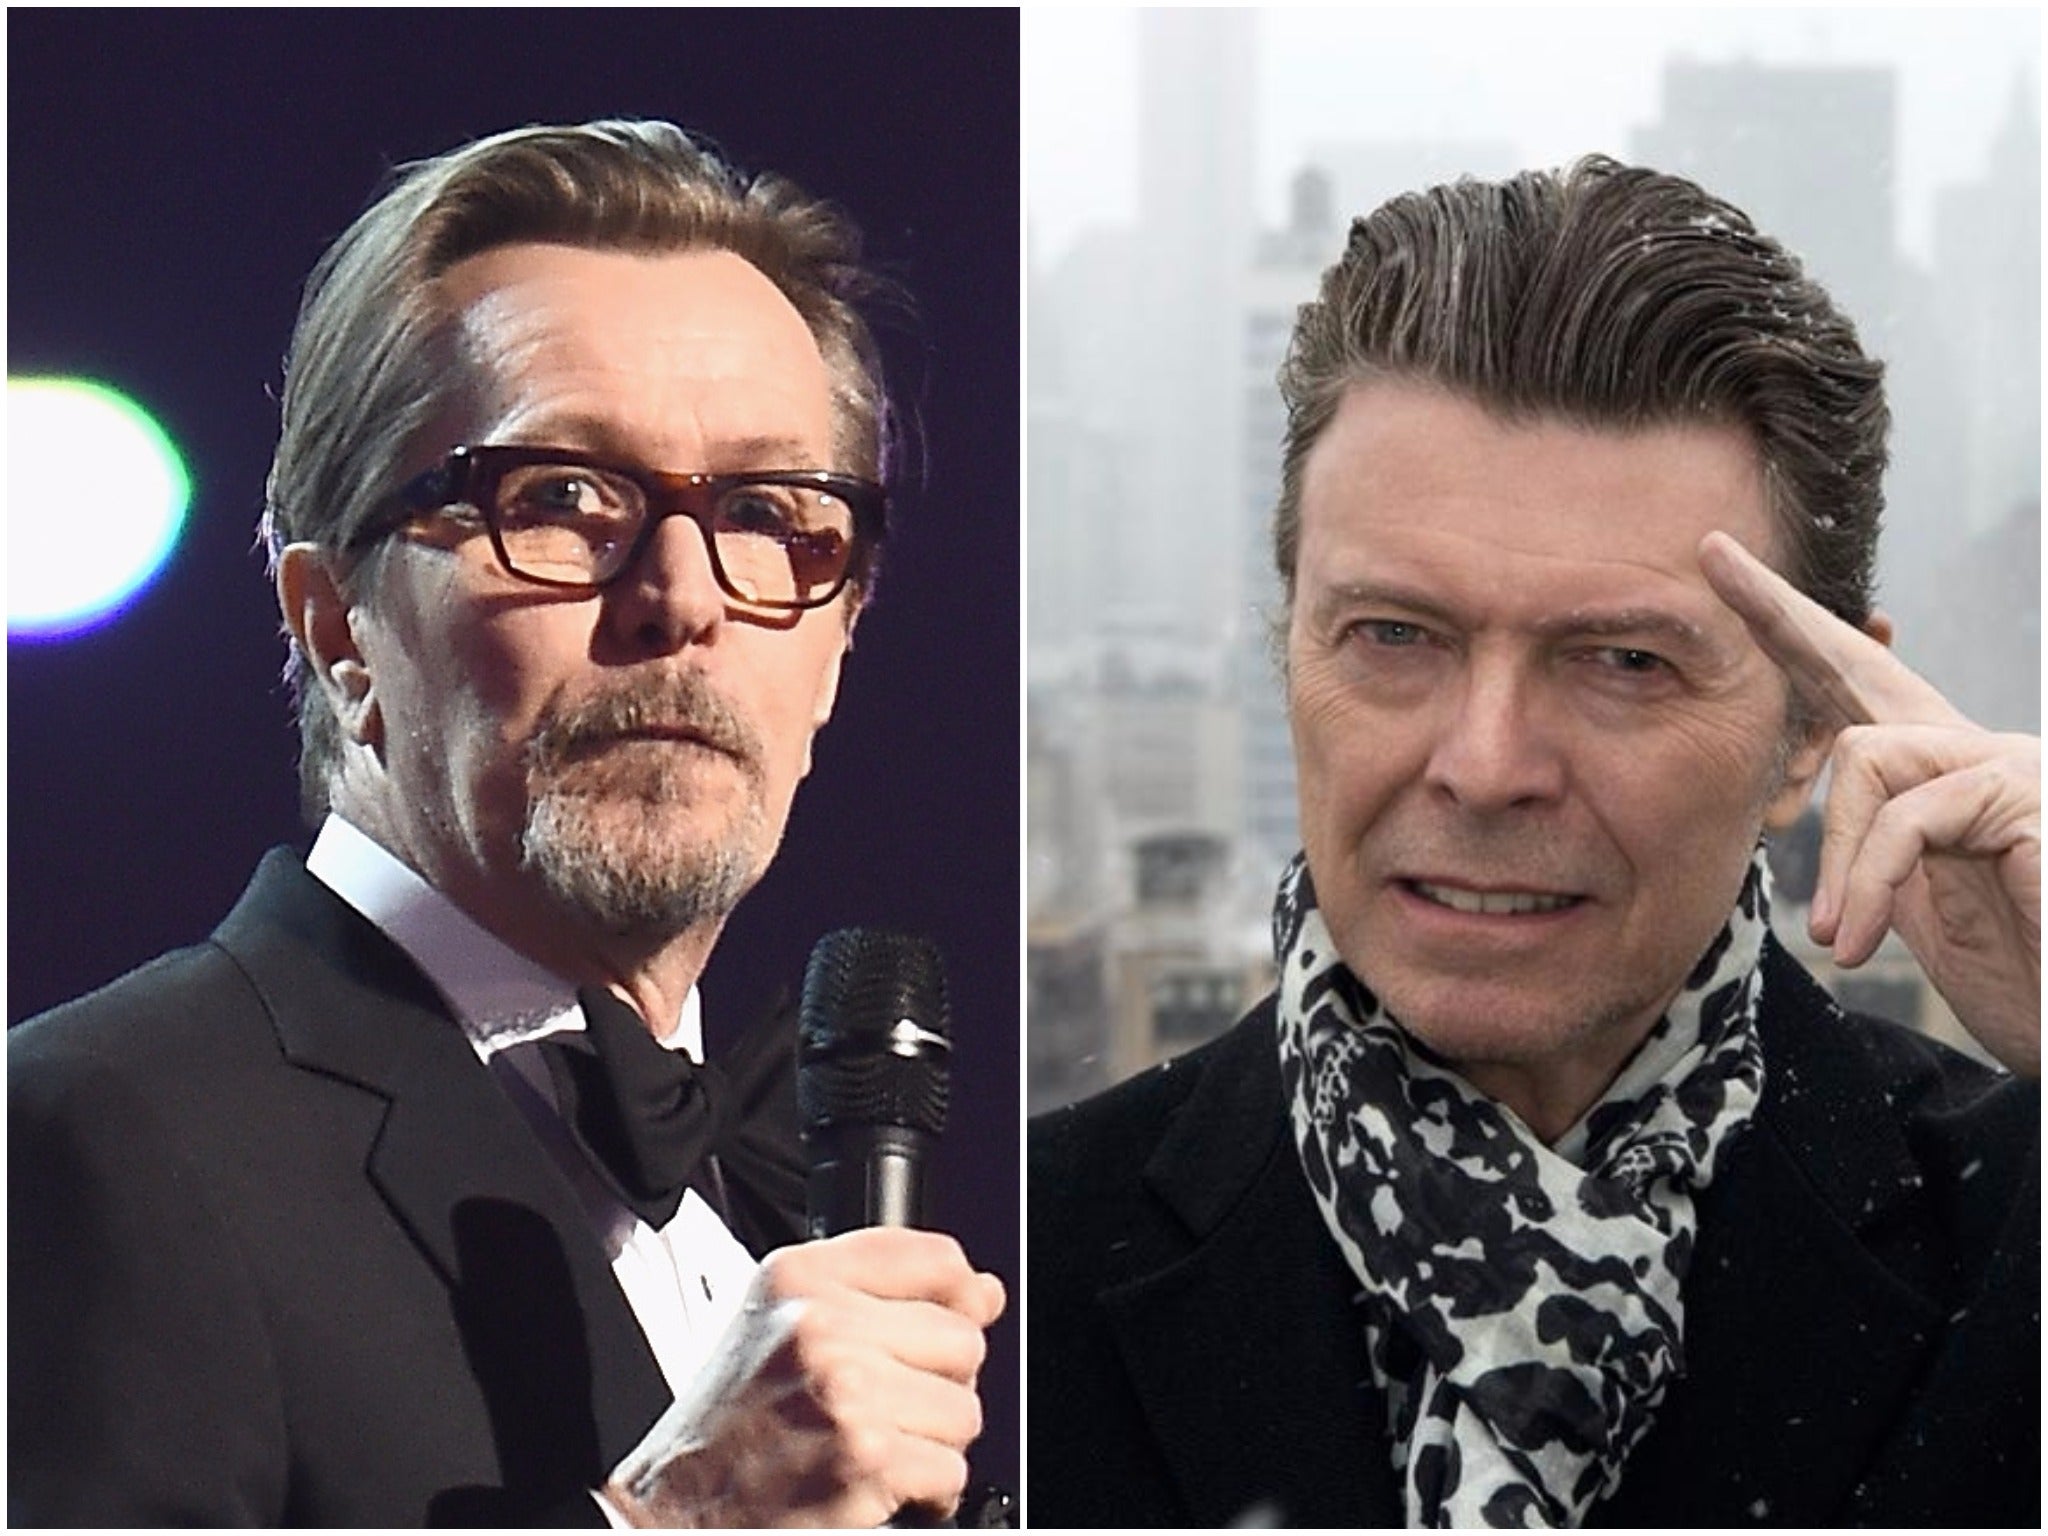 Gary Oldman paid tribute towards his friend David Bowie